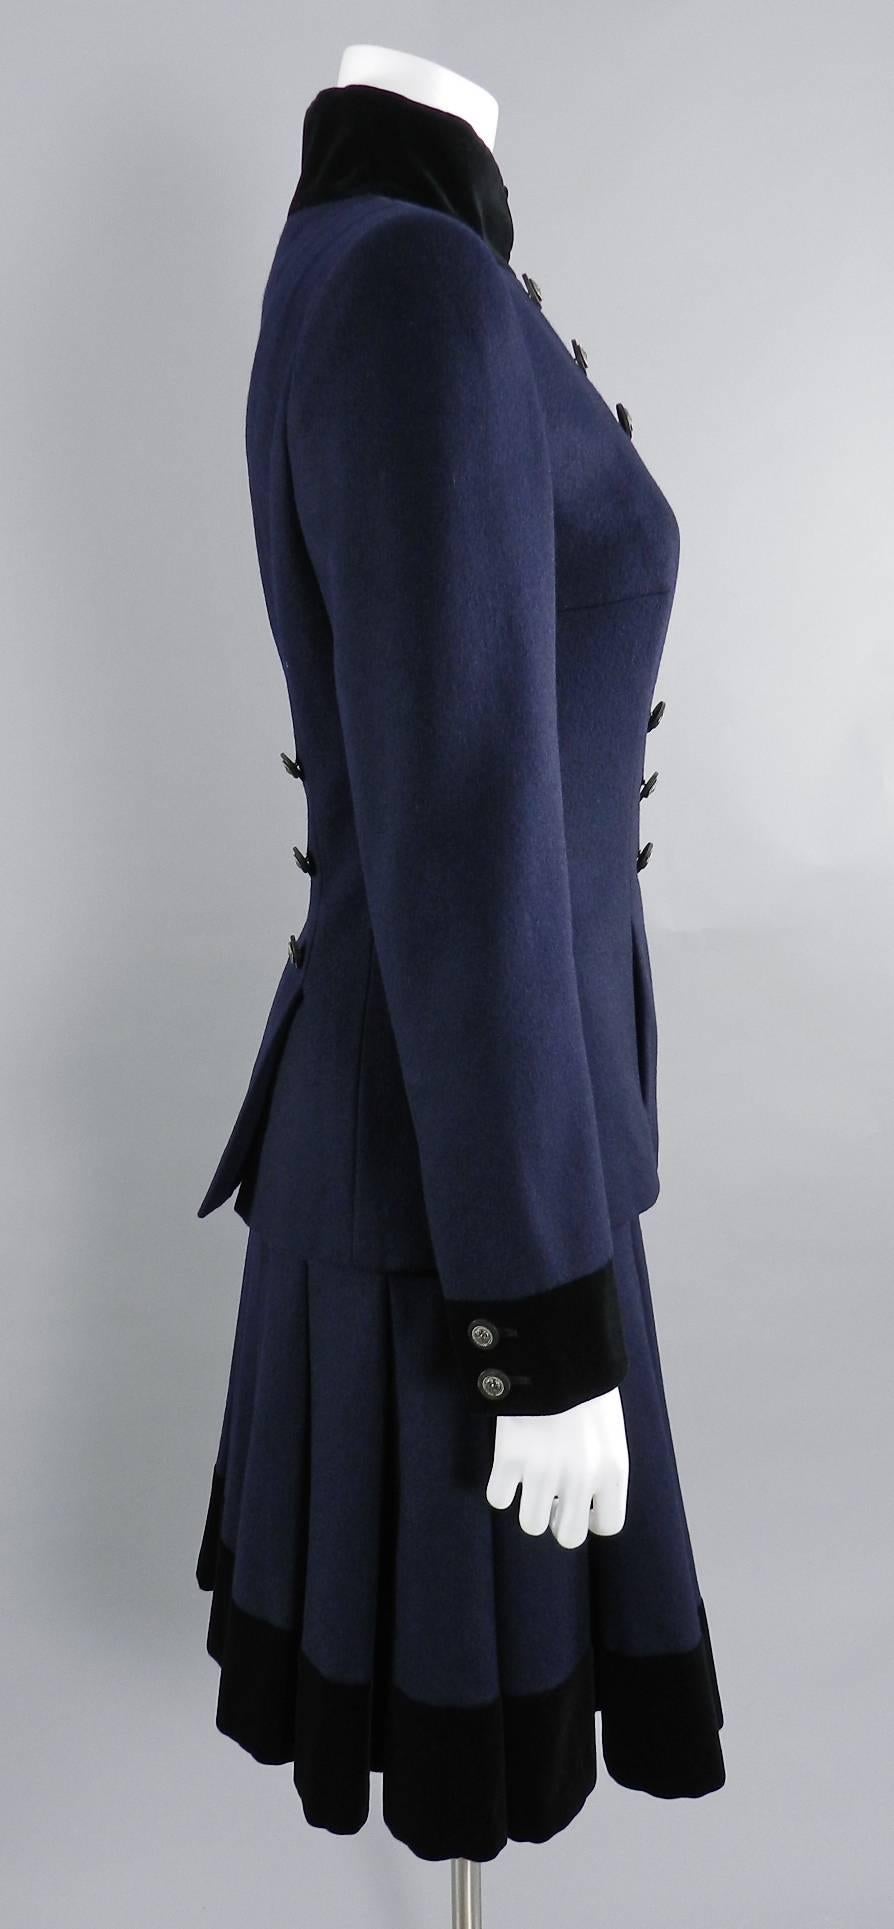 Black Chanel 2014 pre-fall paris dallas runway collection navy wool Military Jacket